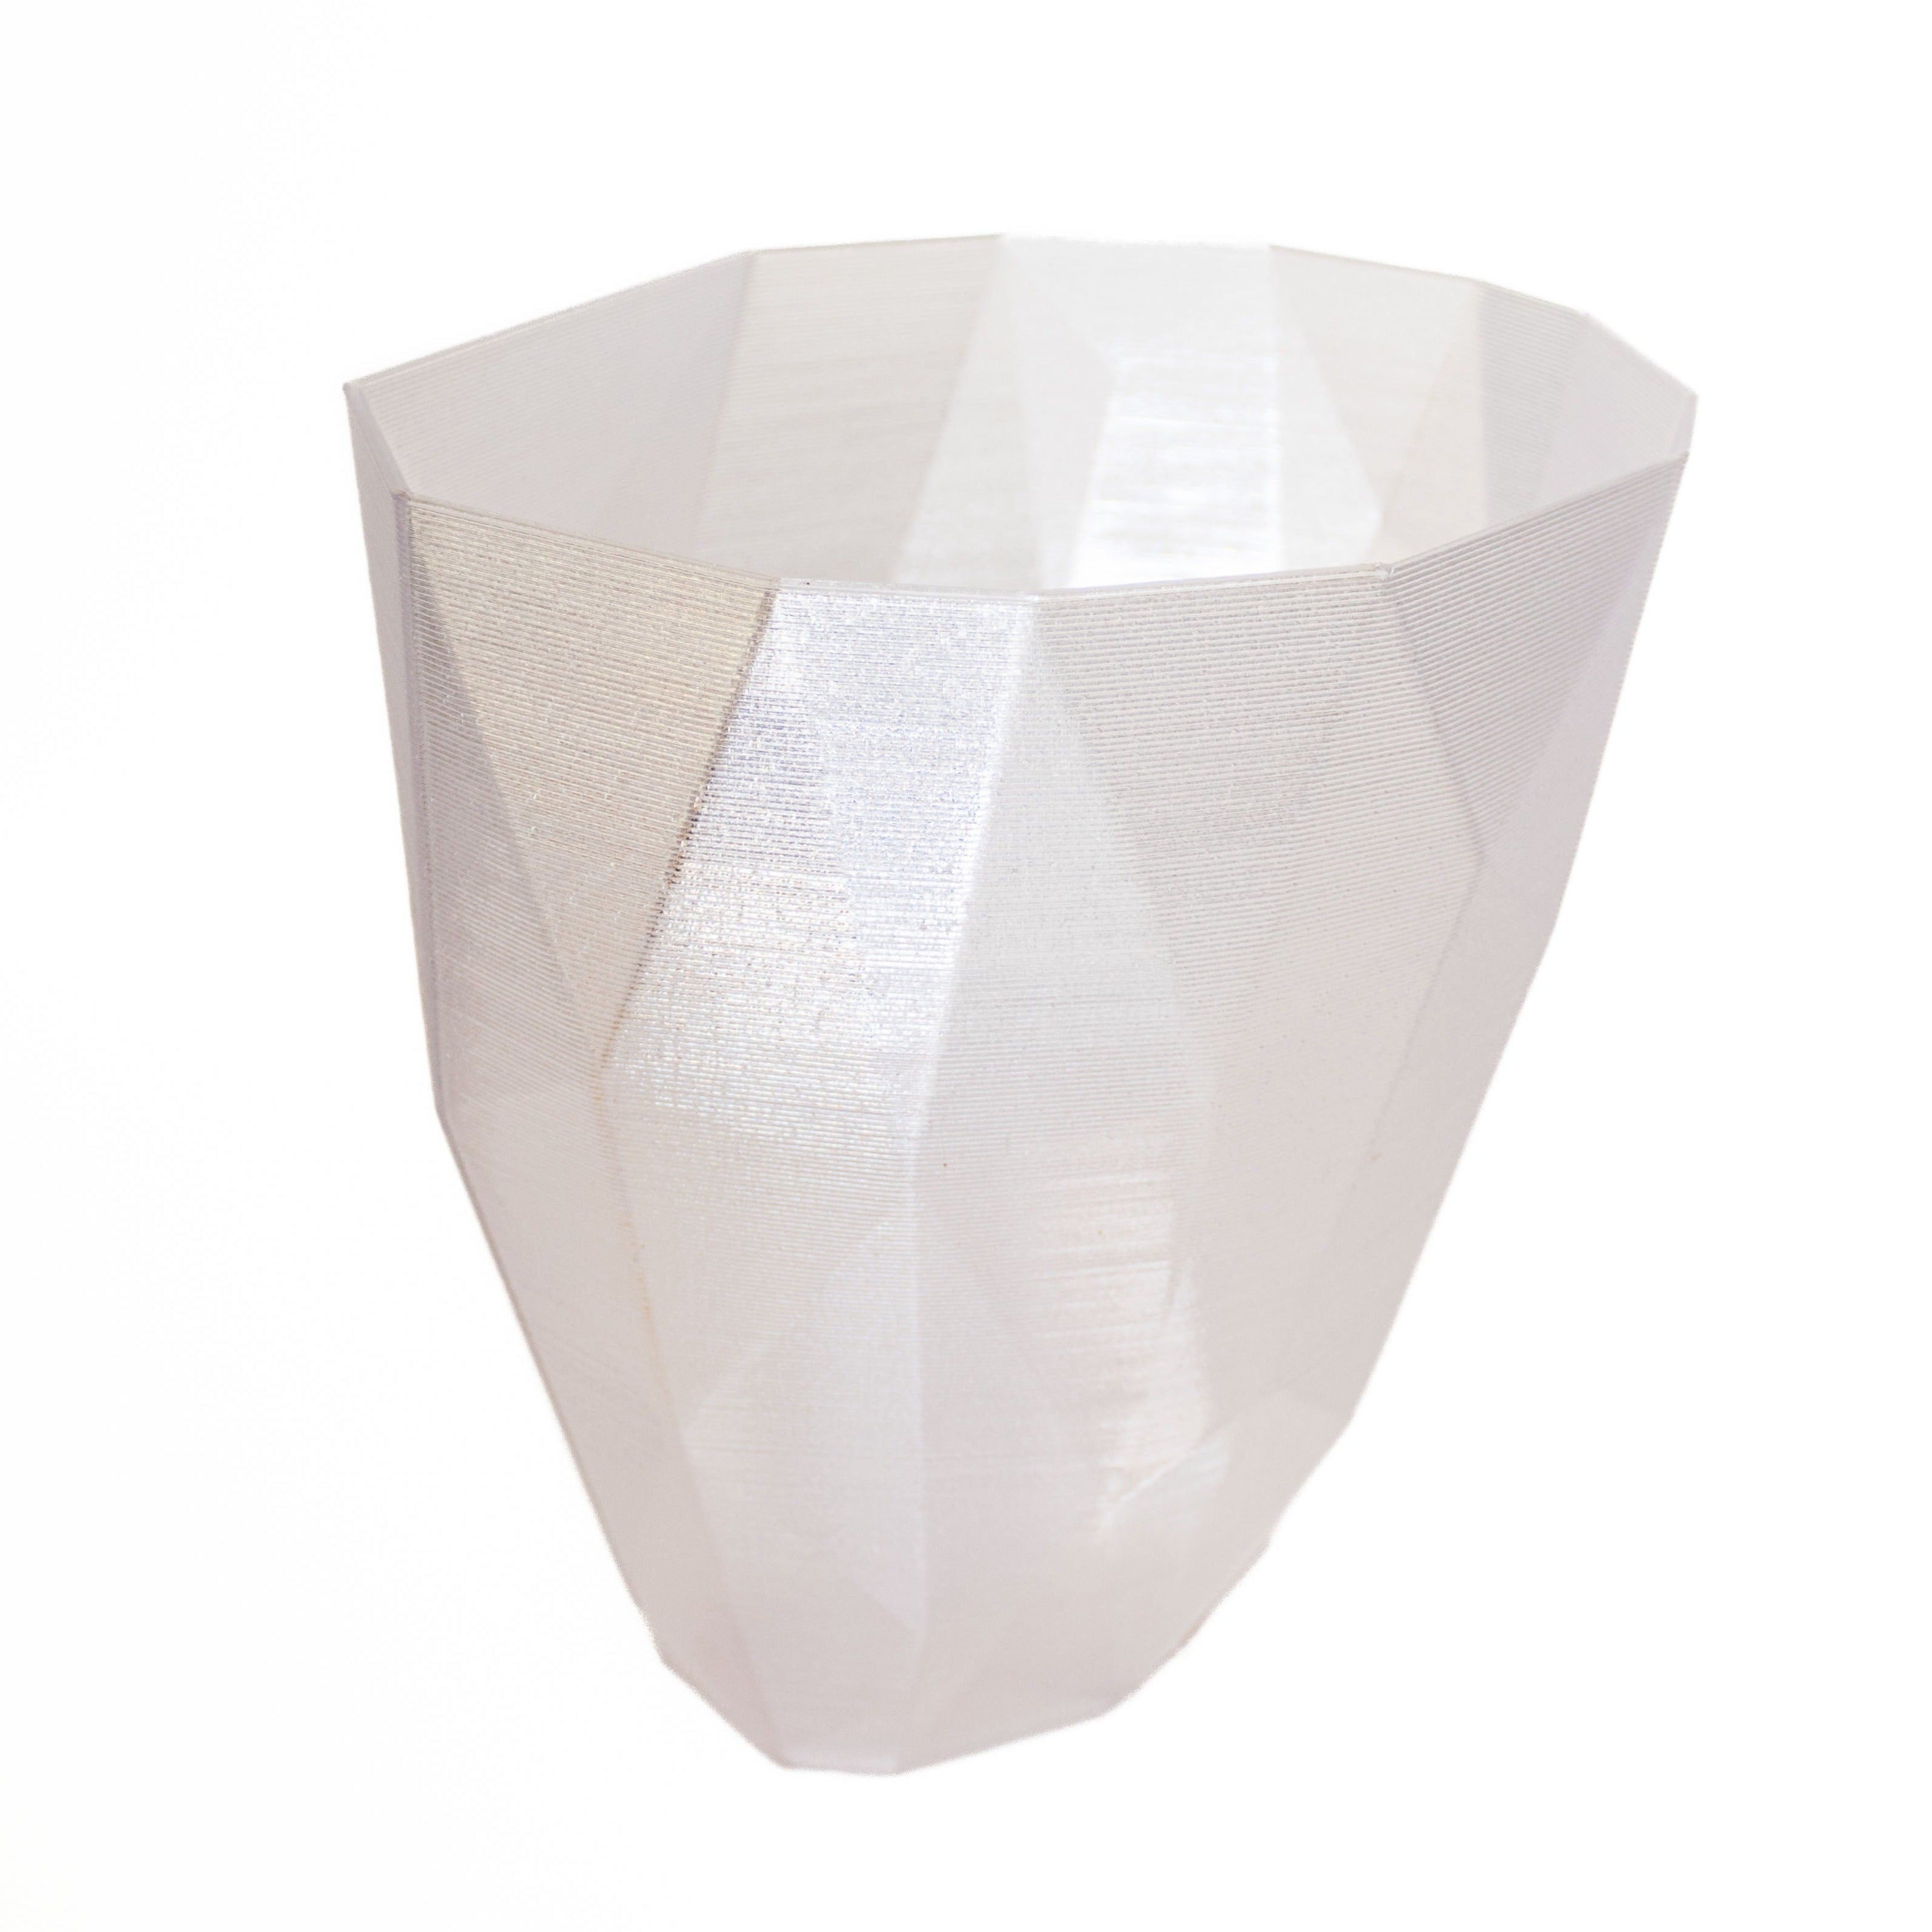 3D Waste basket Clear Semi-Transparent Fragmented Oval